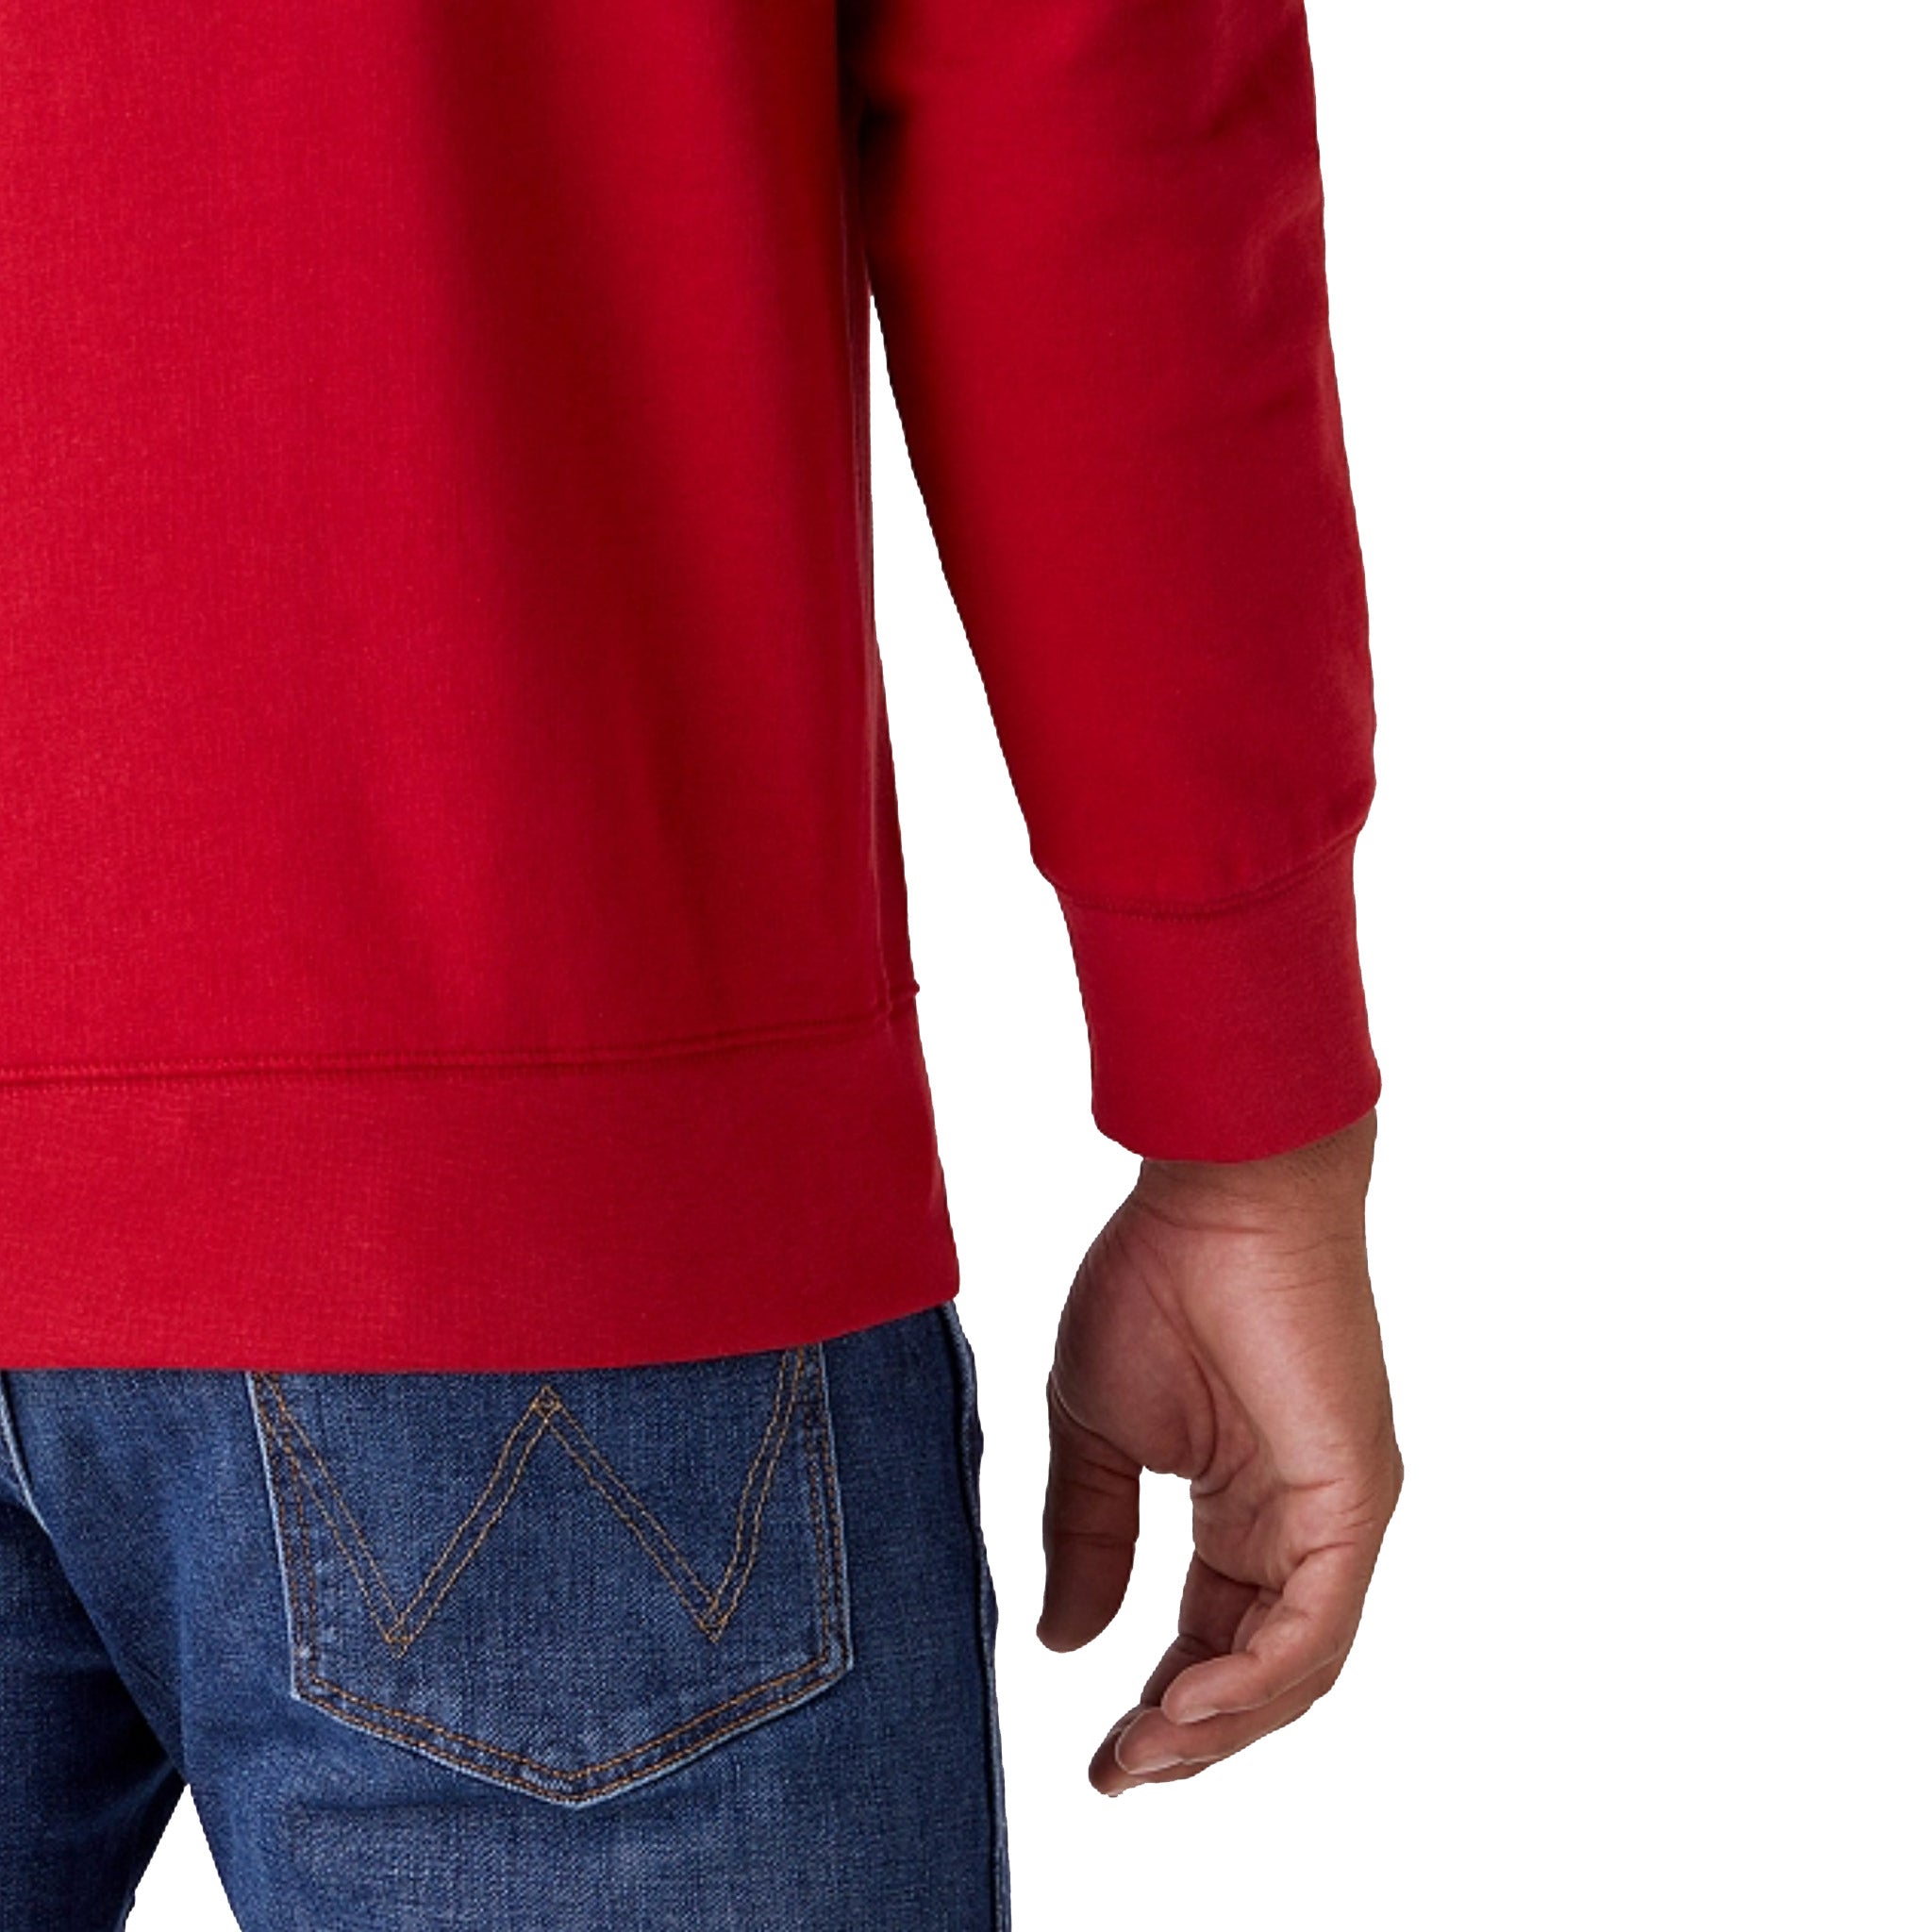 Wrangler Sign Off Sweatshirt in Red Worn By Model Showing Cuff & Hem Details